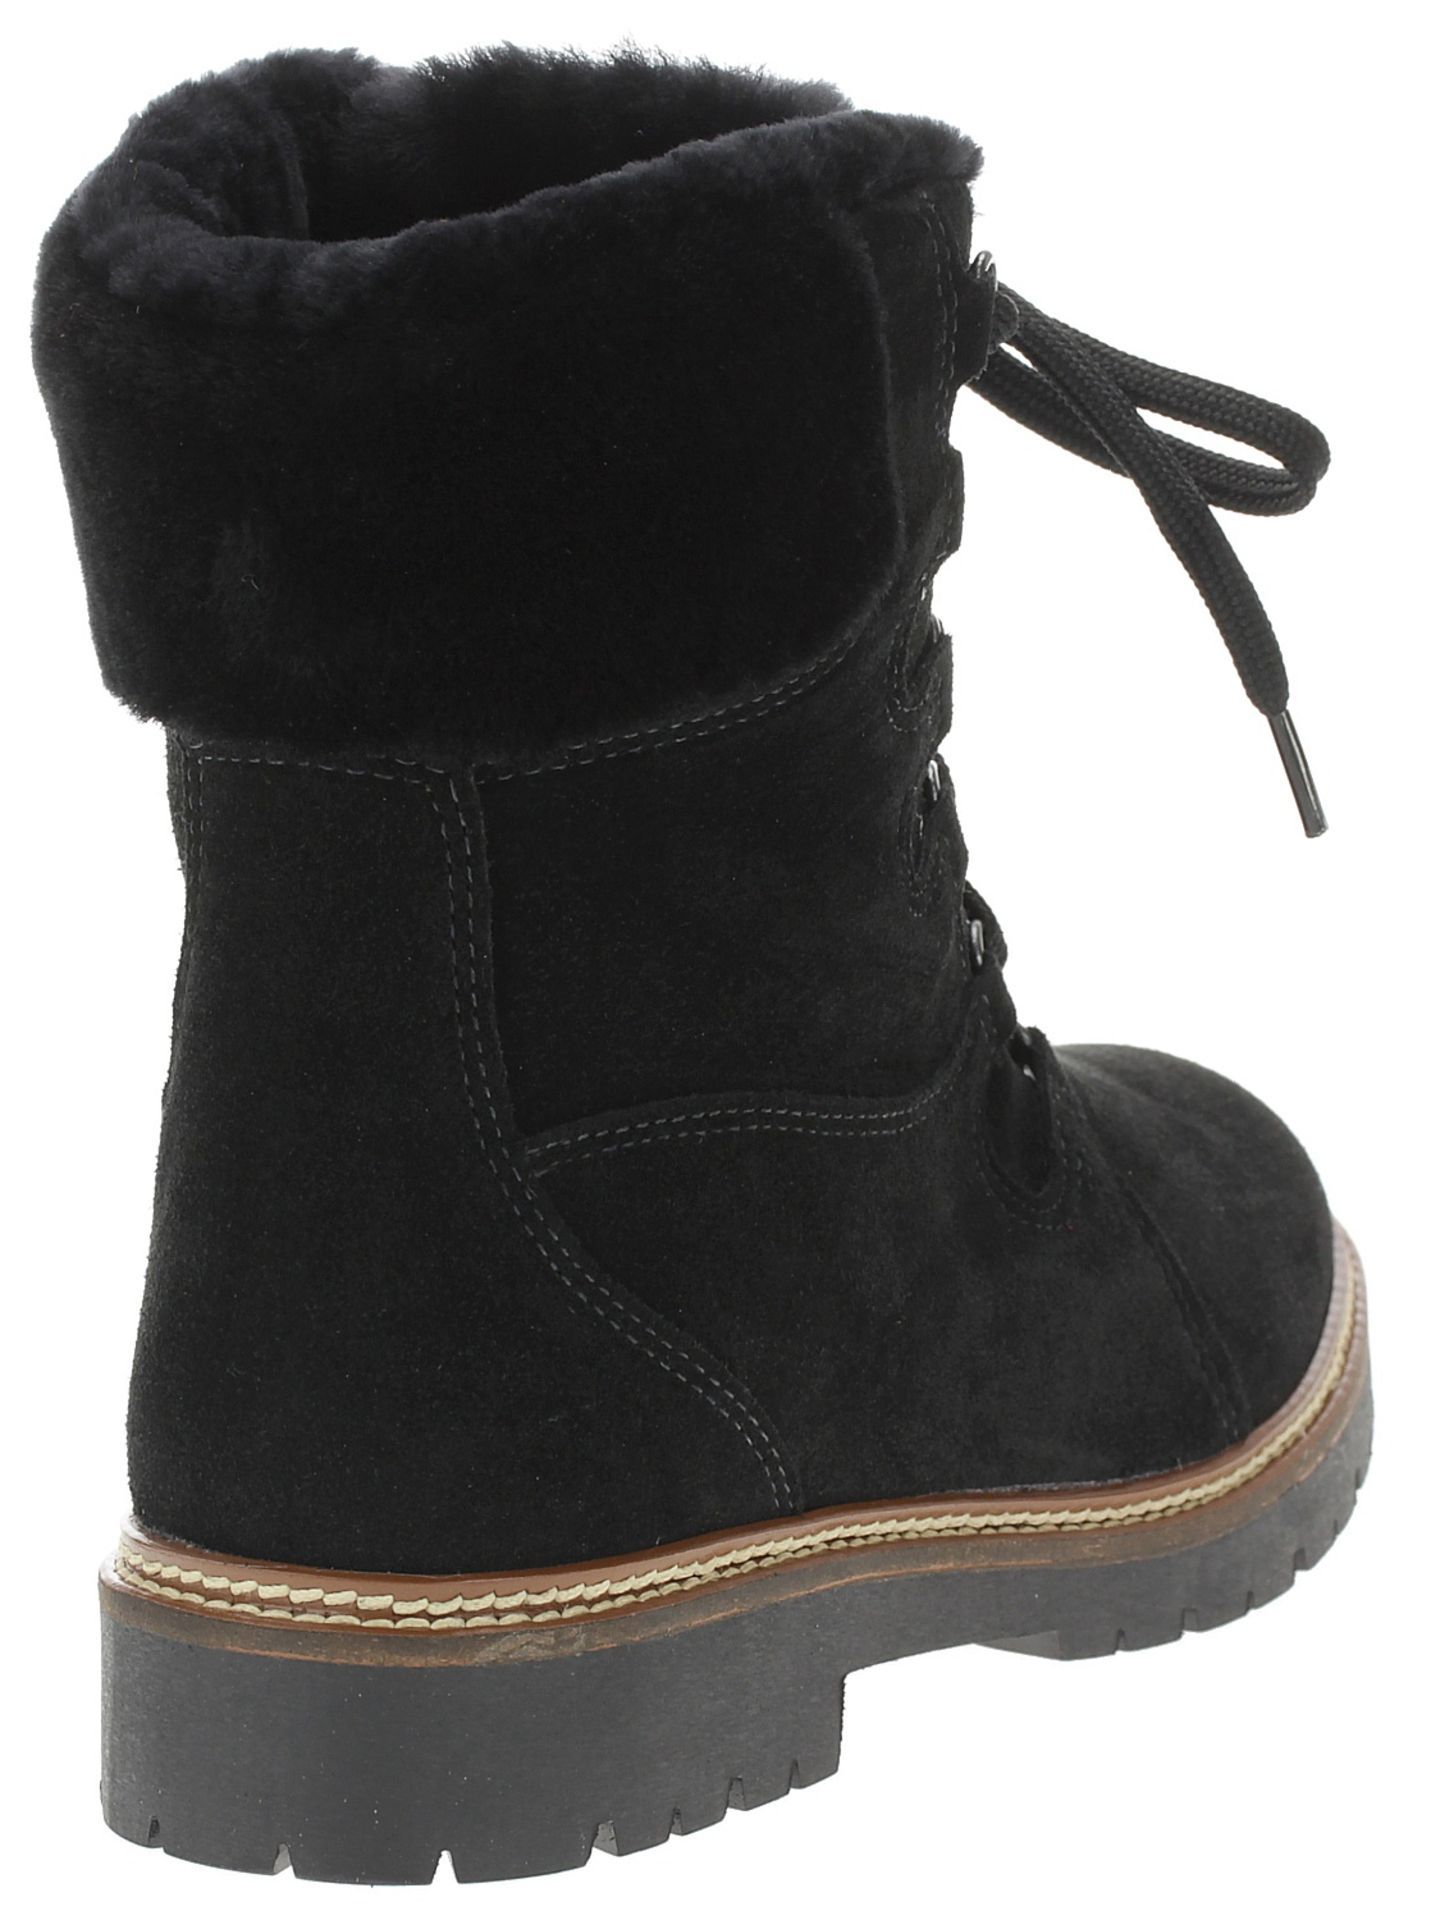 1 x Pair of Designer Olang Meribel 81 Nero Women's Winter Boots - Euro Size 40 - Brand New Boxed - Image 2 of 5